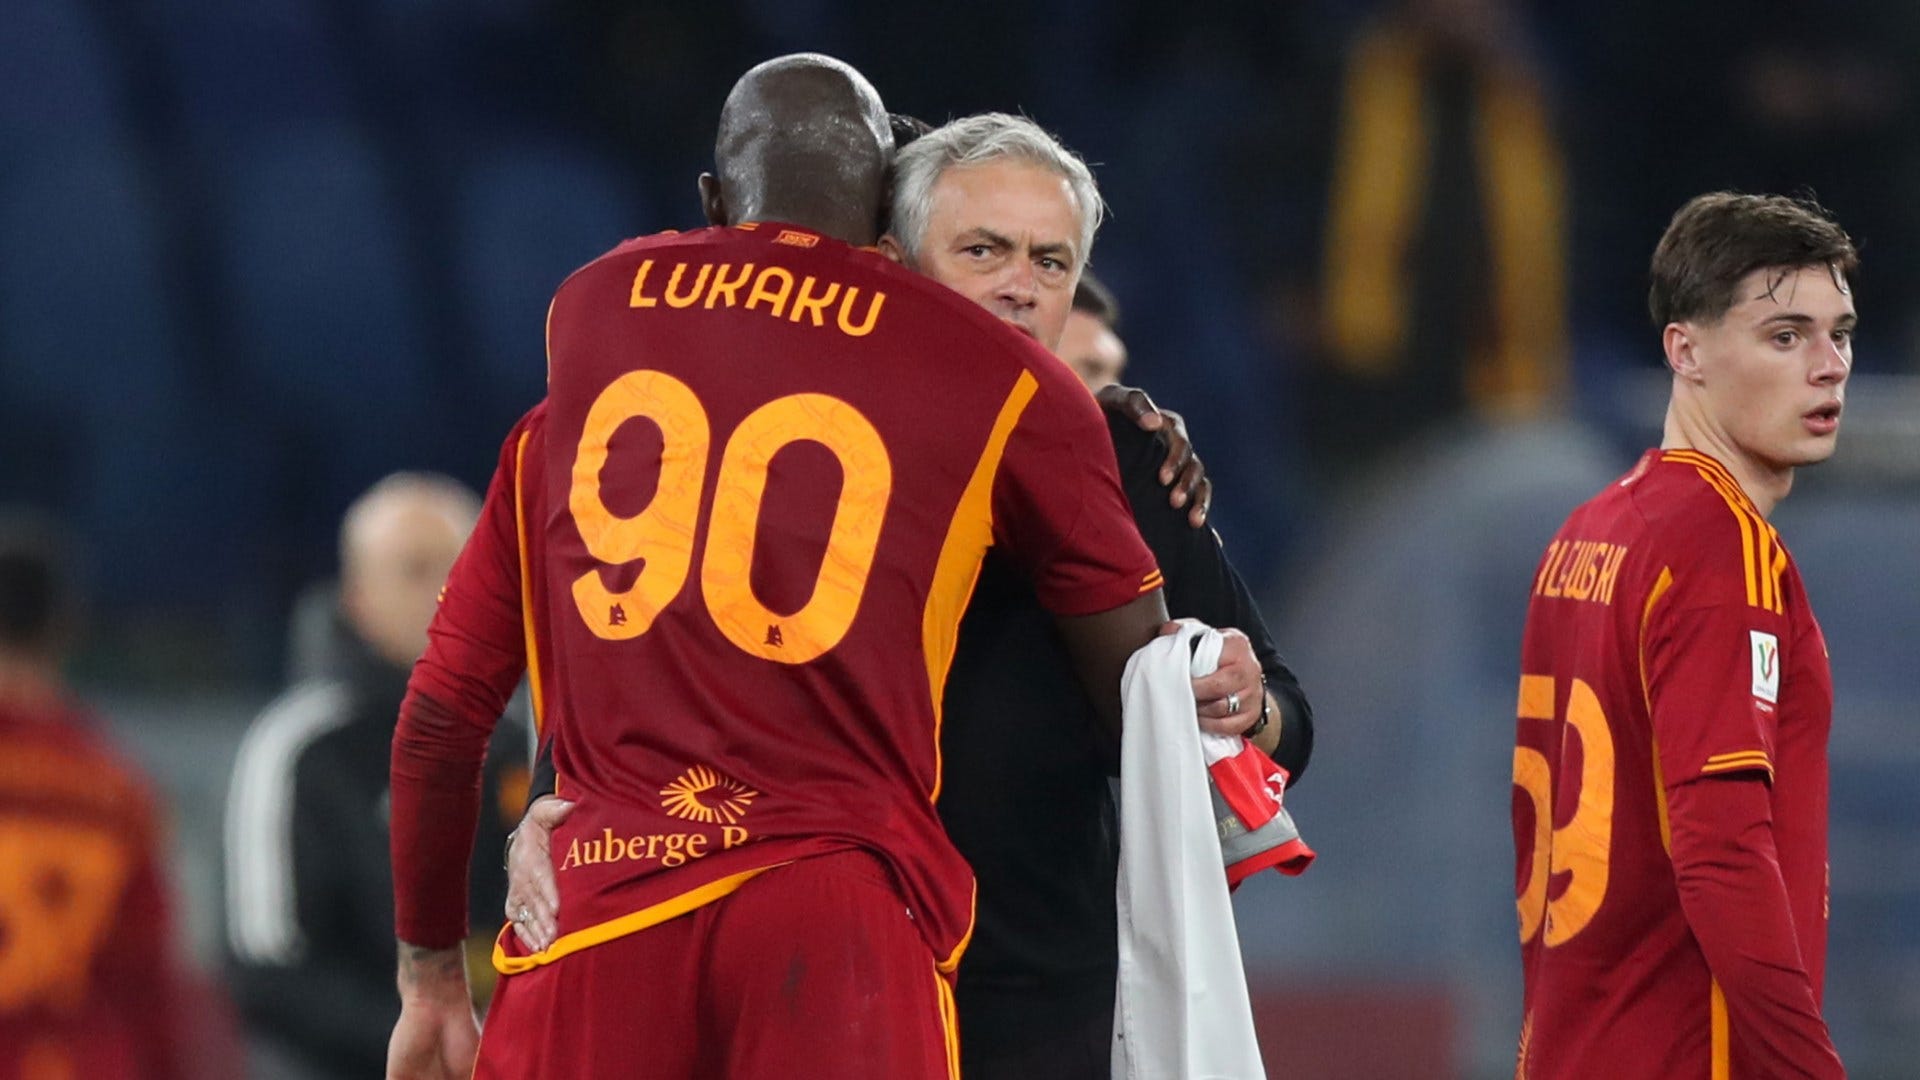 Jose Mourinho Dipecat, Pemain AS Roma Merasa Sedih dan Kecewa Trofi yang Diraih Bersama Terancam